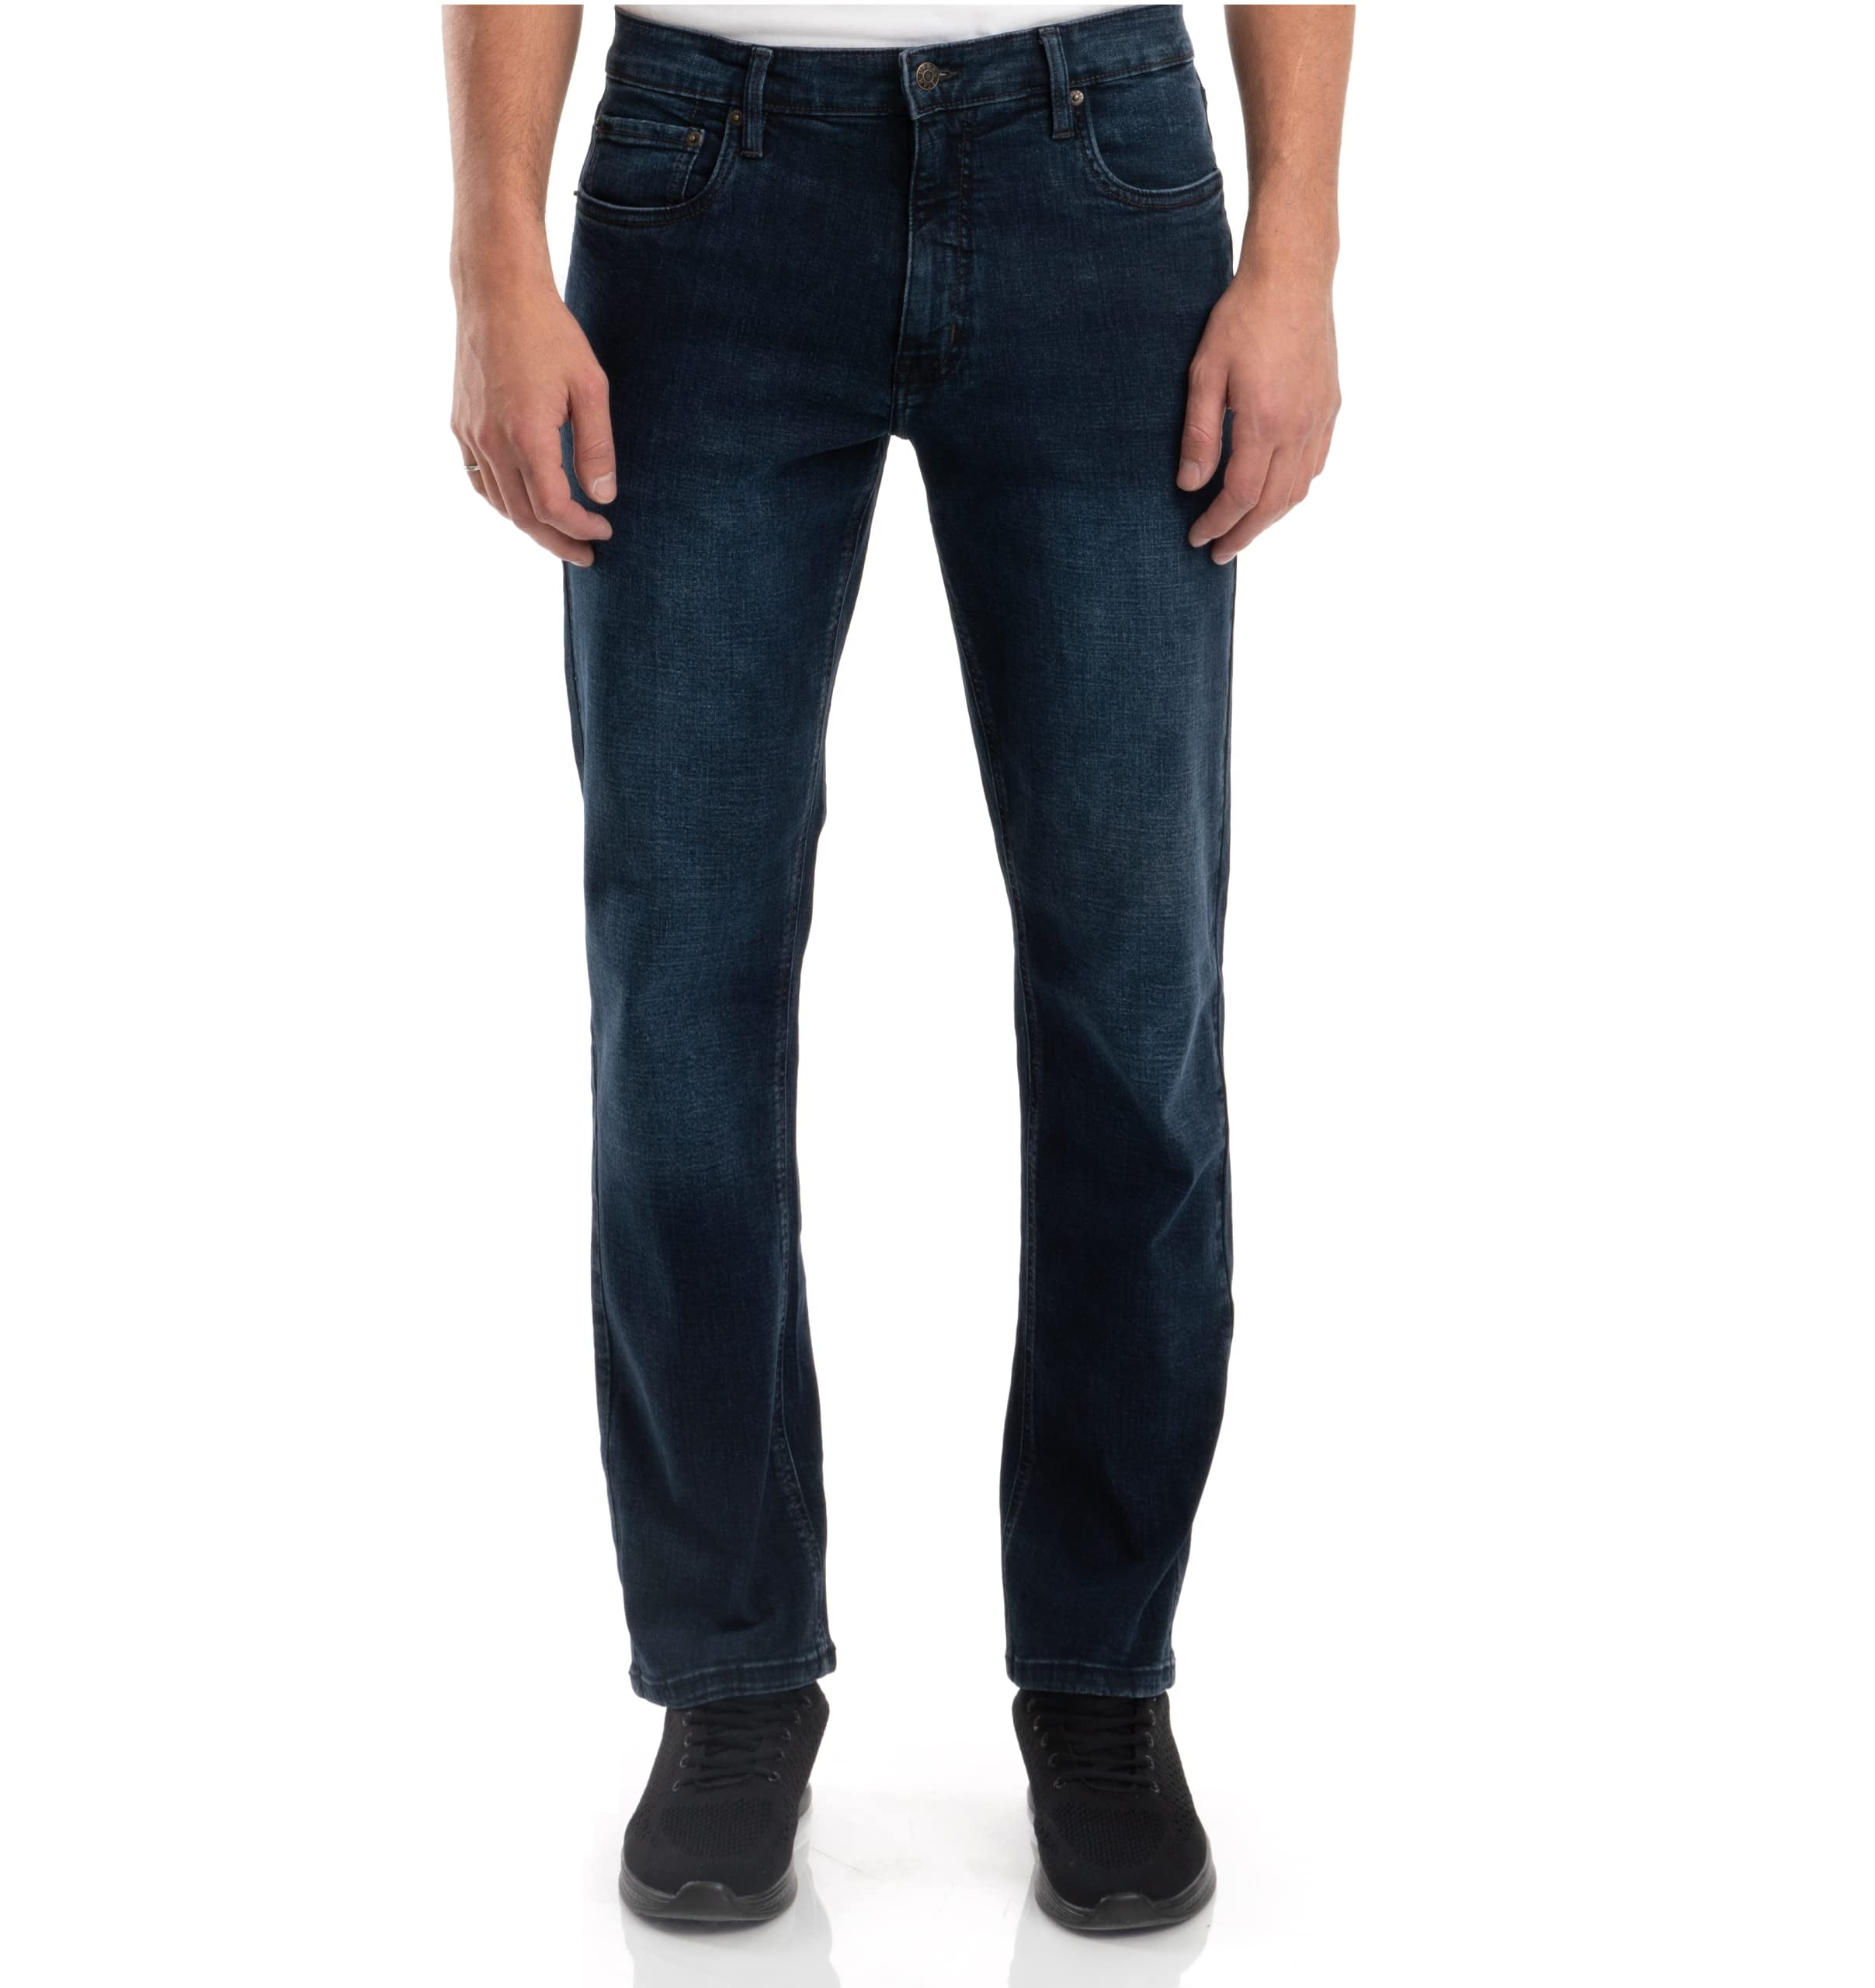 Star Mens Jeans Relaxed Fit - Straight Leg Stretch Jeans for Men - Ultimate Comfort Superflex Pants Dark Blue 38W x 32L - Walmart.com